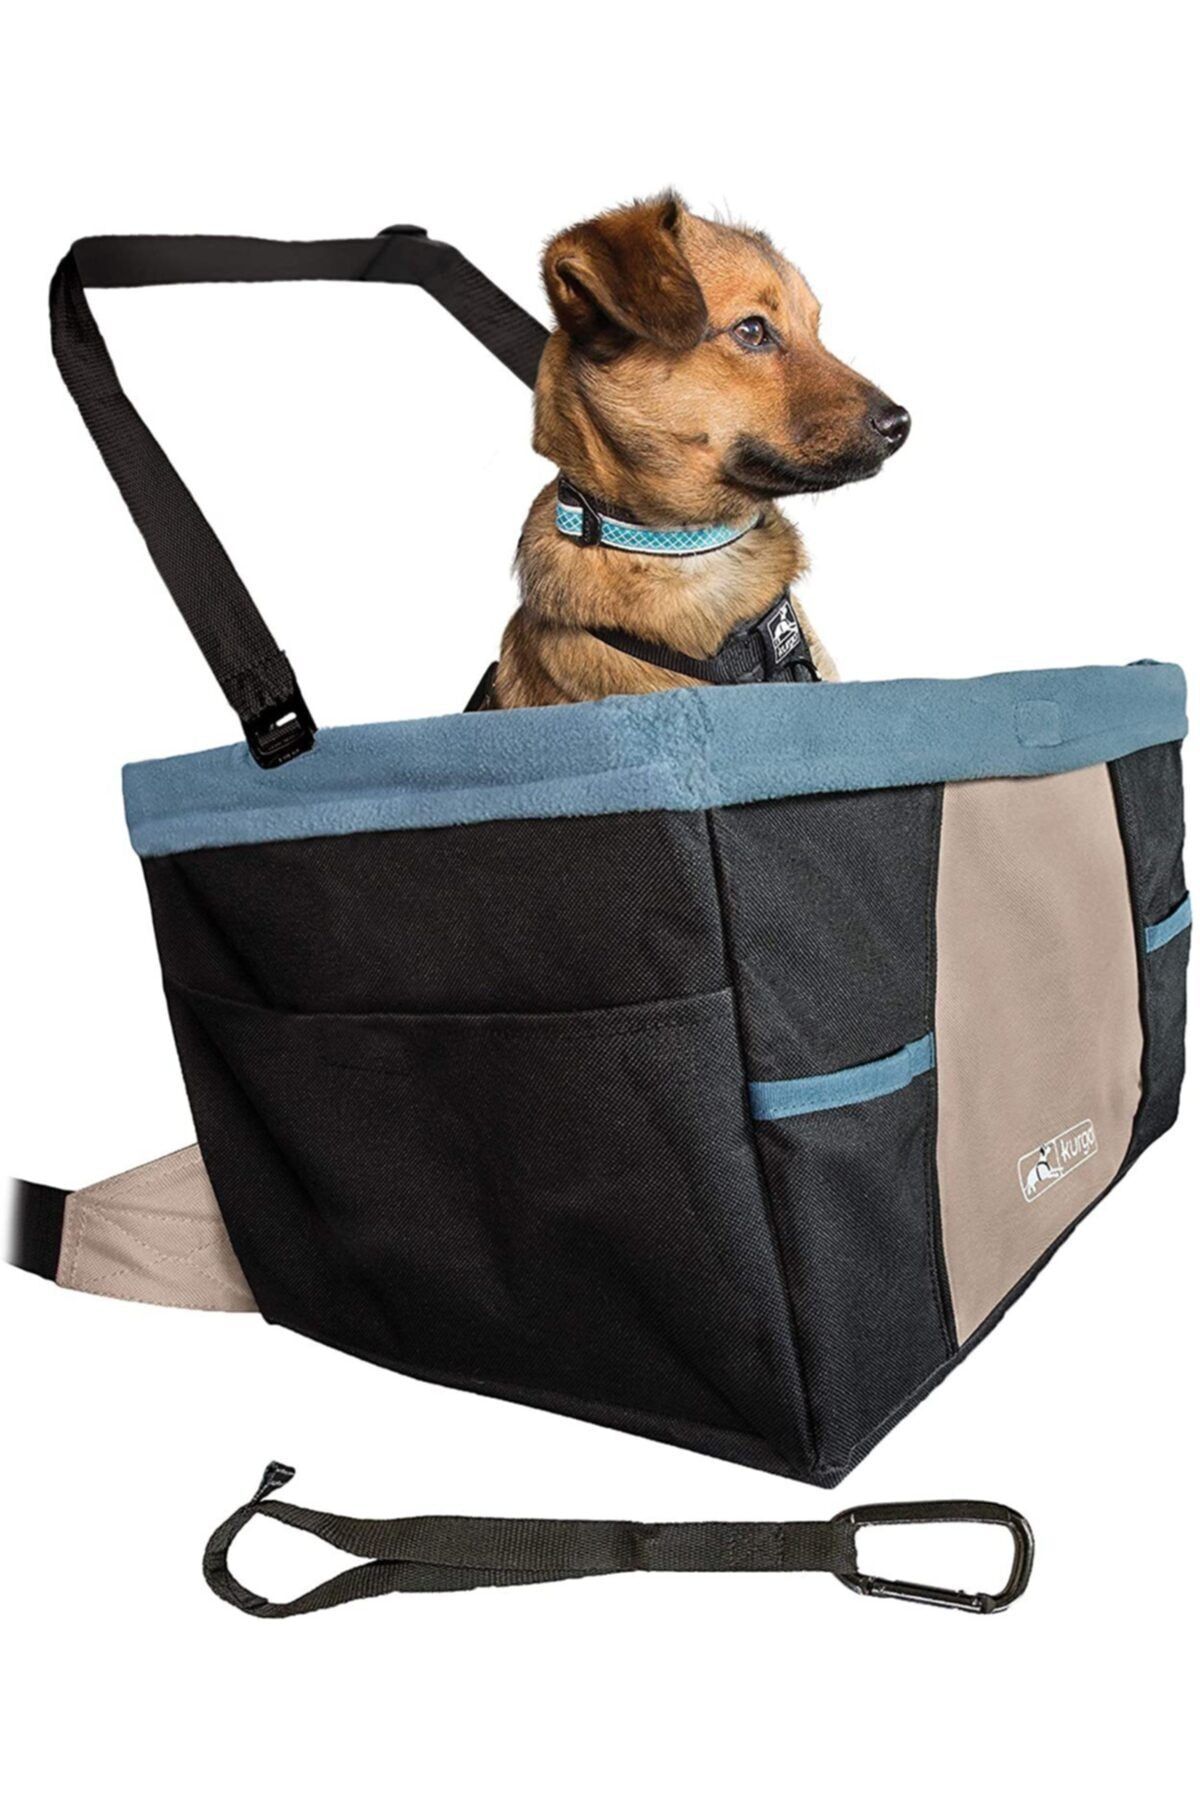 Pet Safe Kurgo Rover Köpek Oto Koltuğu Siyah/mavi K01144